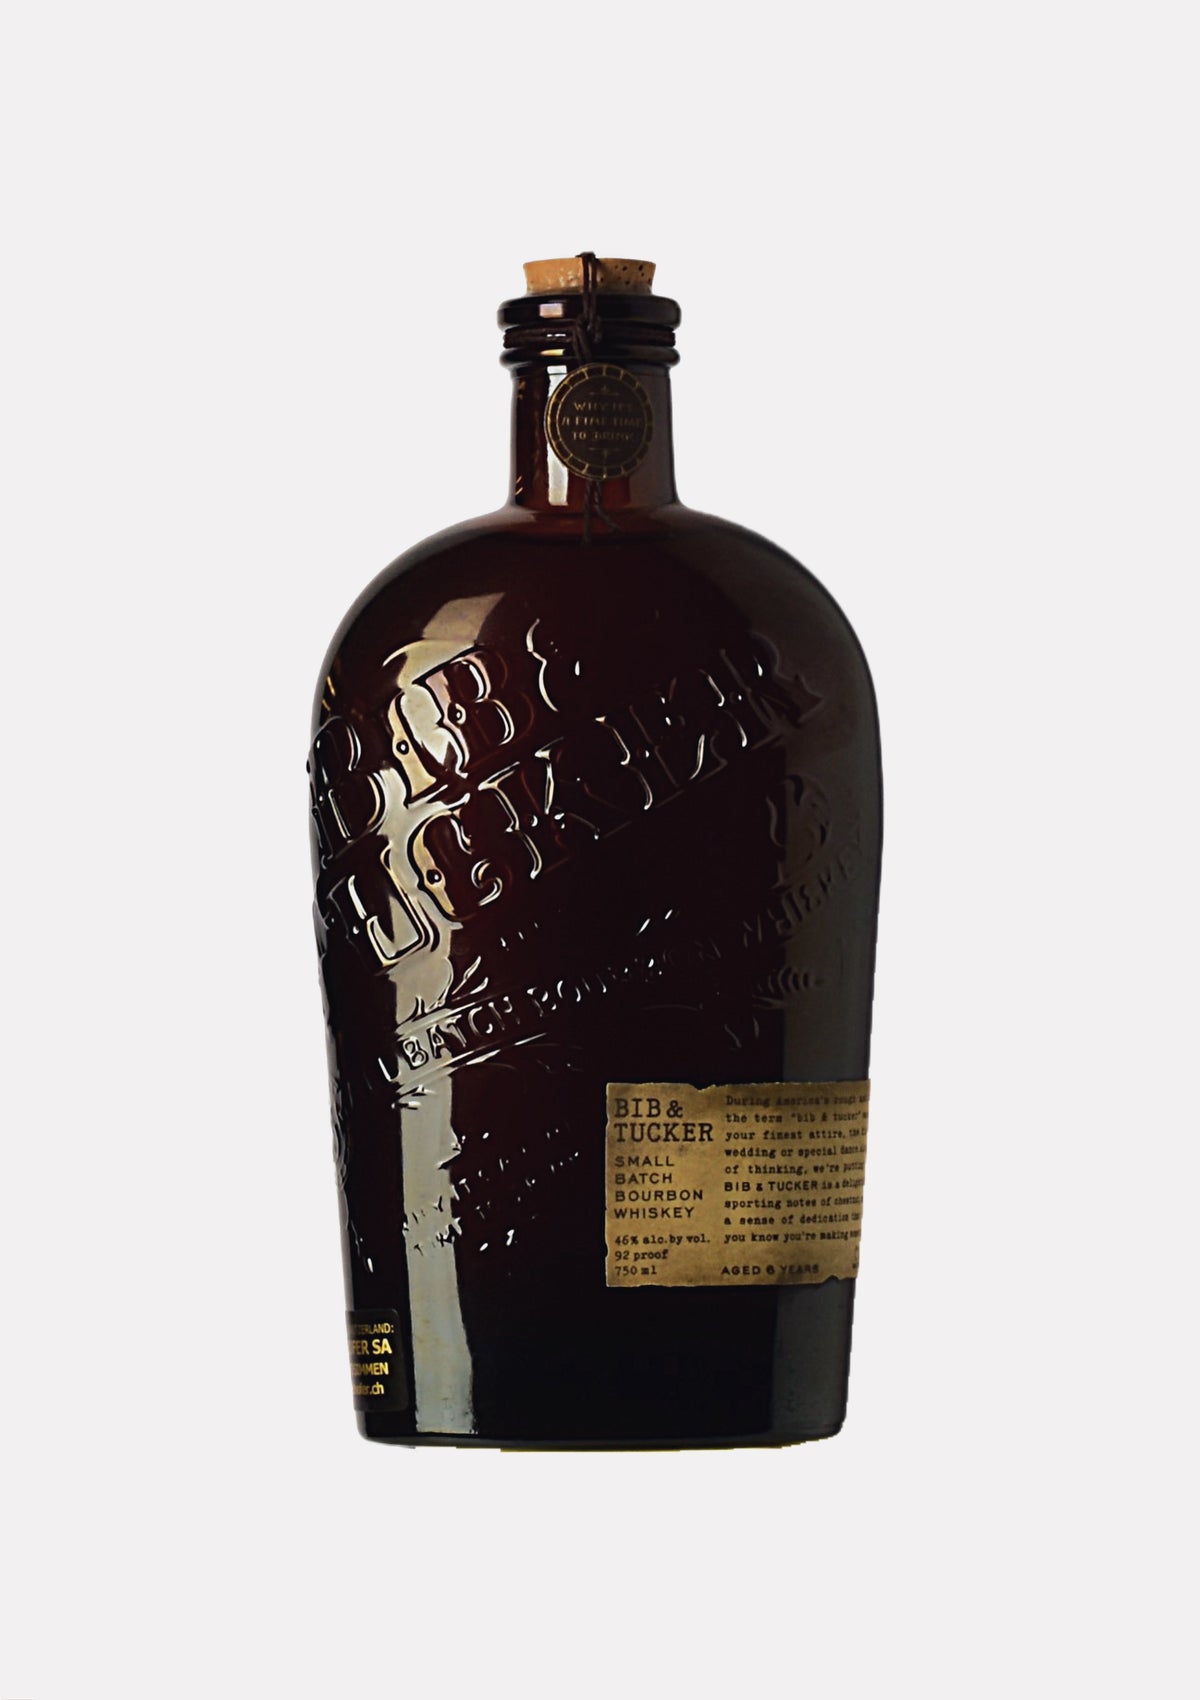 Bib & Tucker Small Batch Bourbon Whiskey Batch 002 6 Jahre